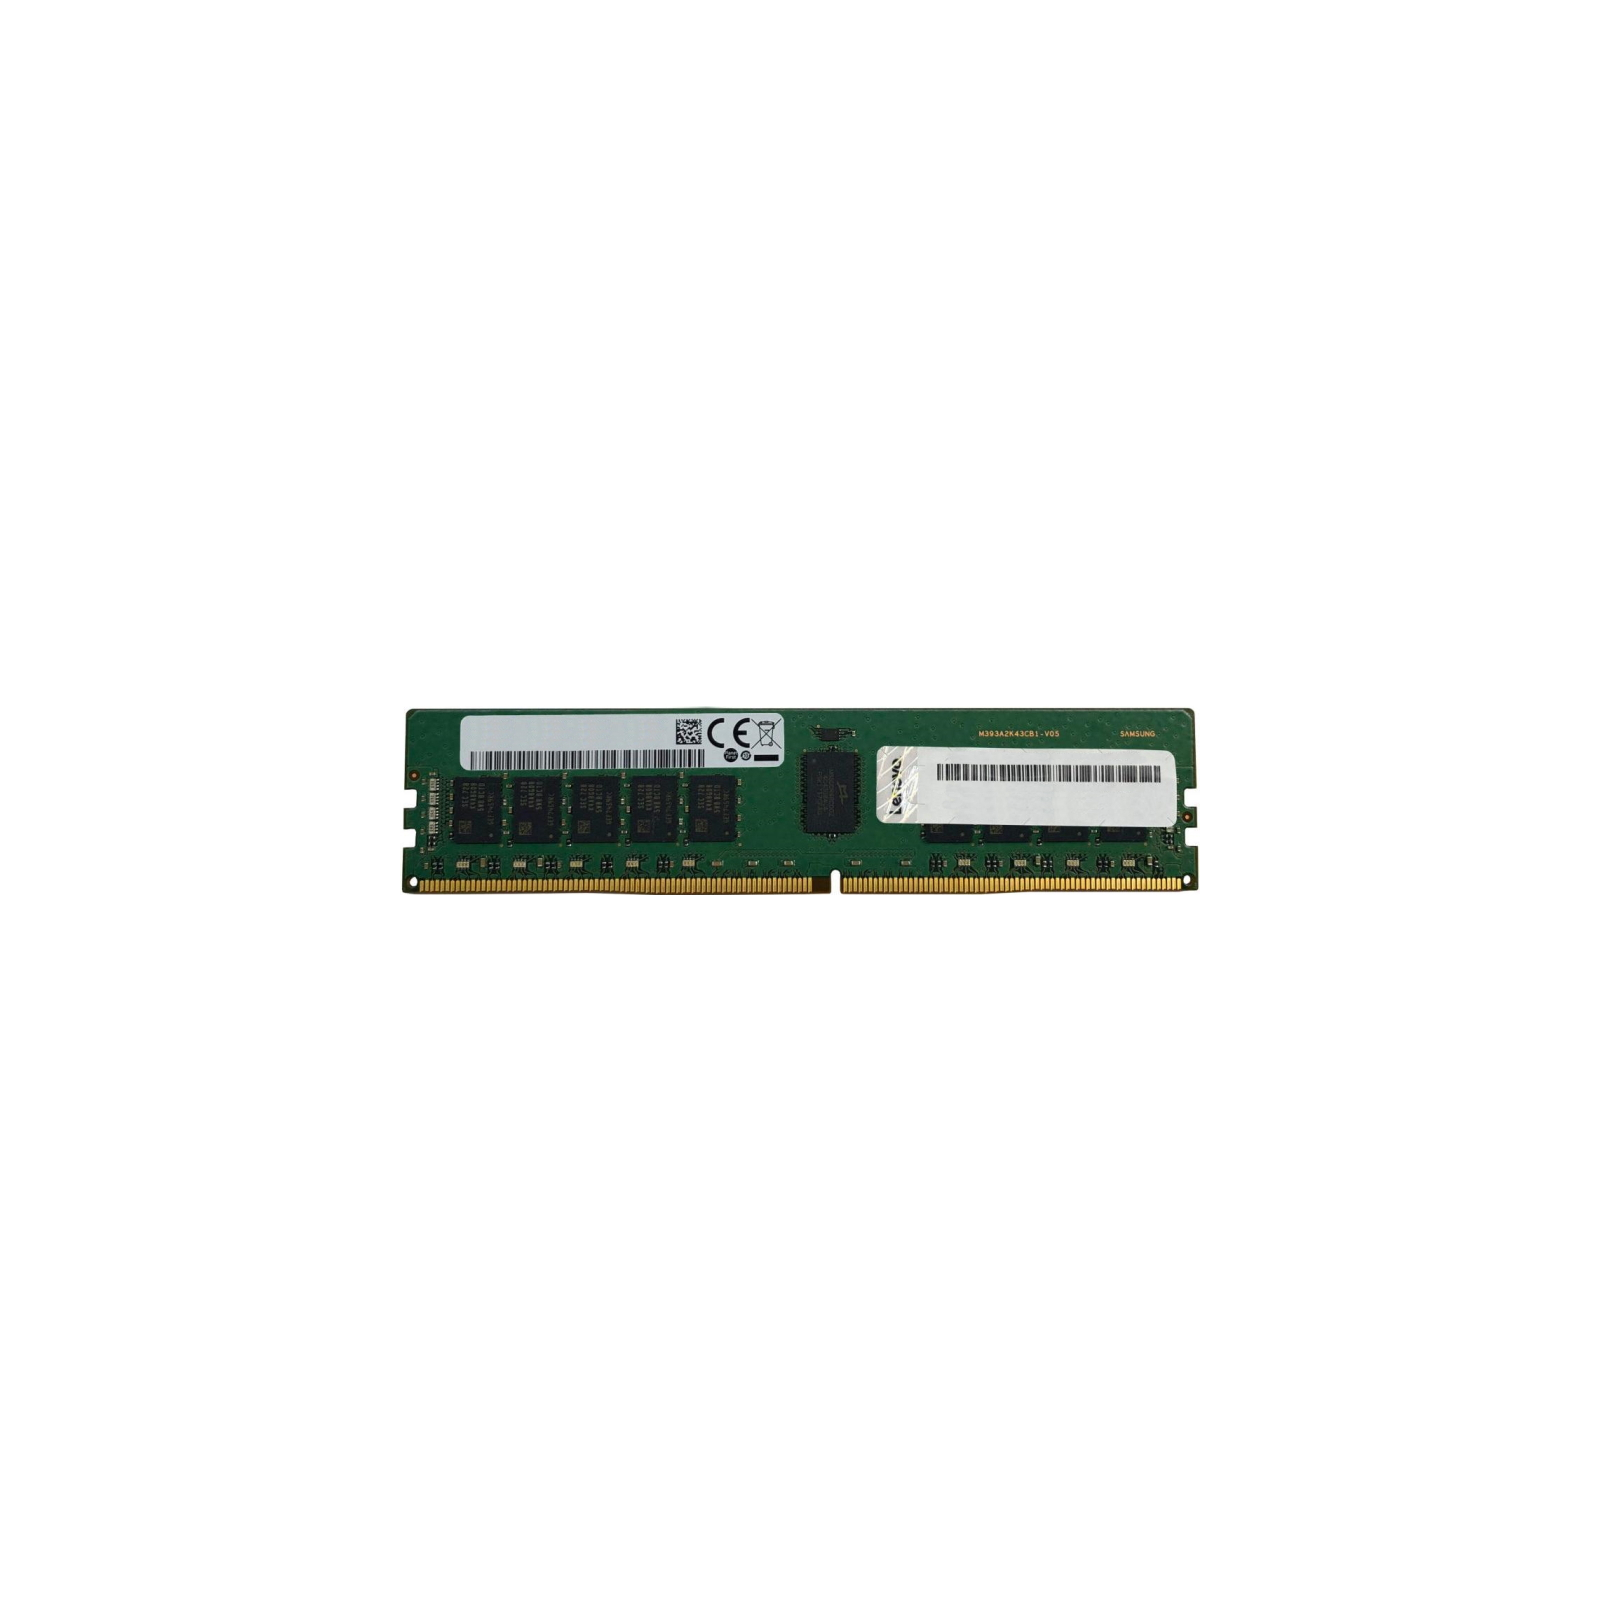 Модуль памяти для сервера Lenovo 32GB TruDDR4 3200 MHz (2Rx4 1.2V) RDIMM (4X77A08633)